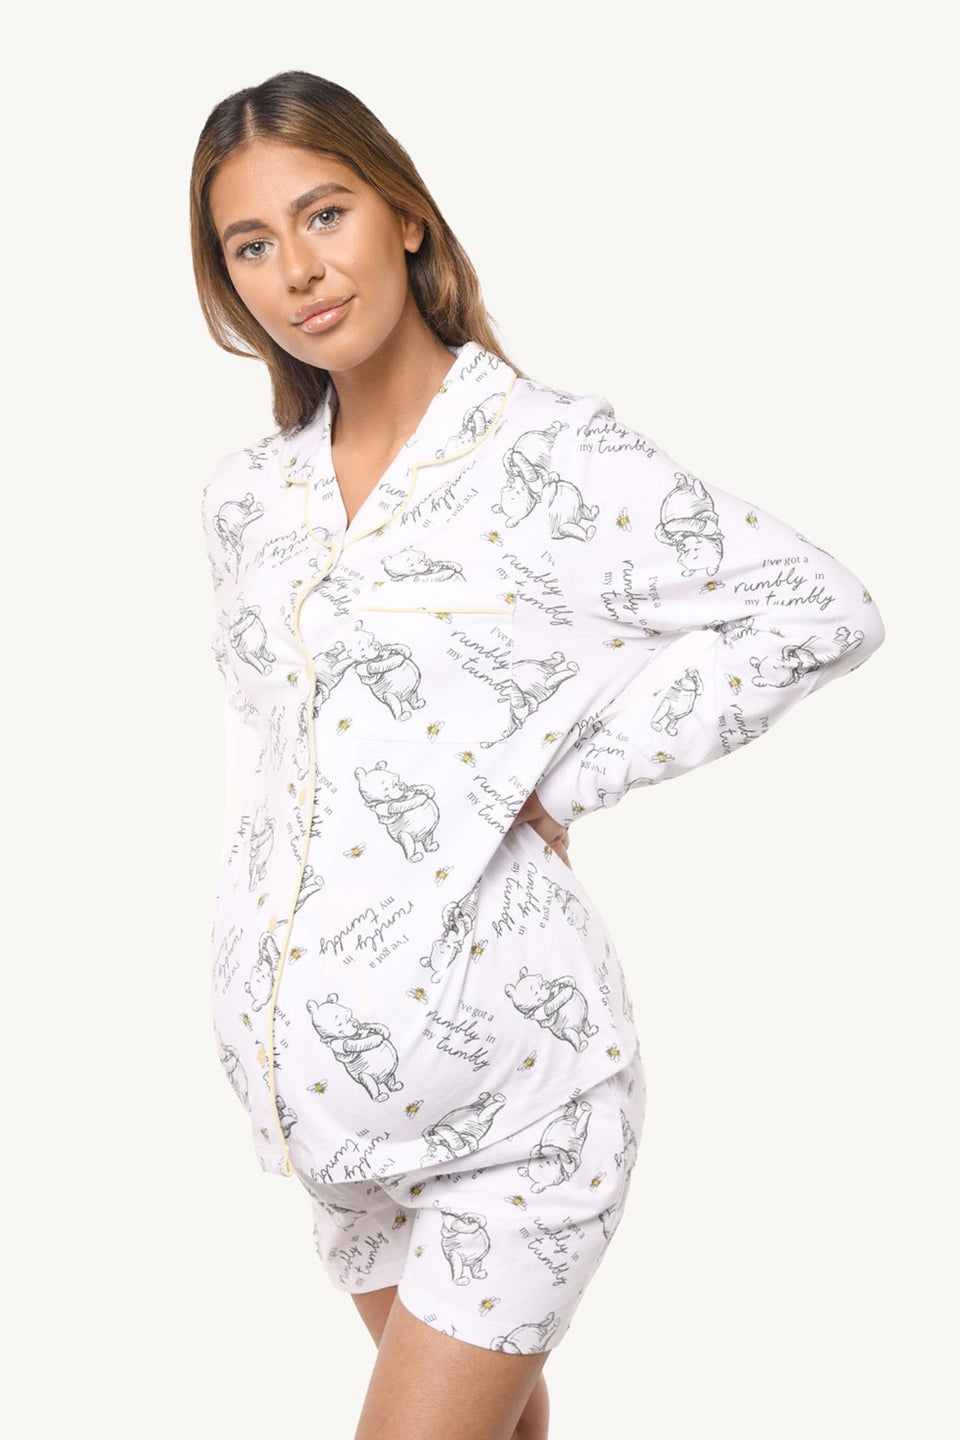 Winnie The Pooh  Ladies White Maternity Pyjama